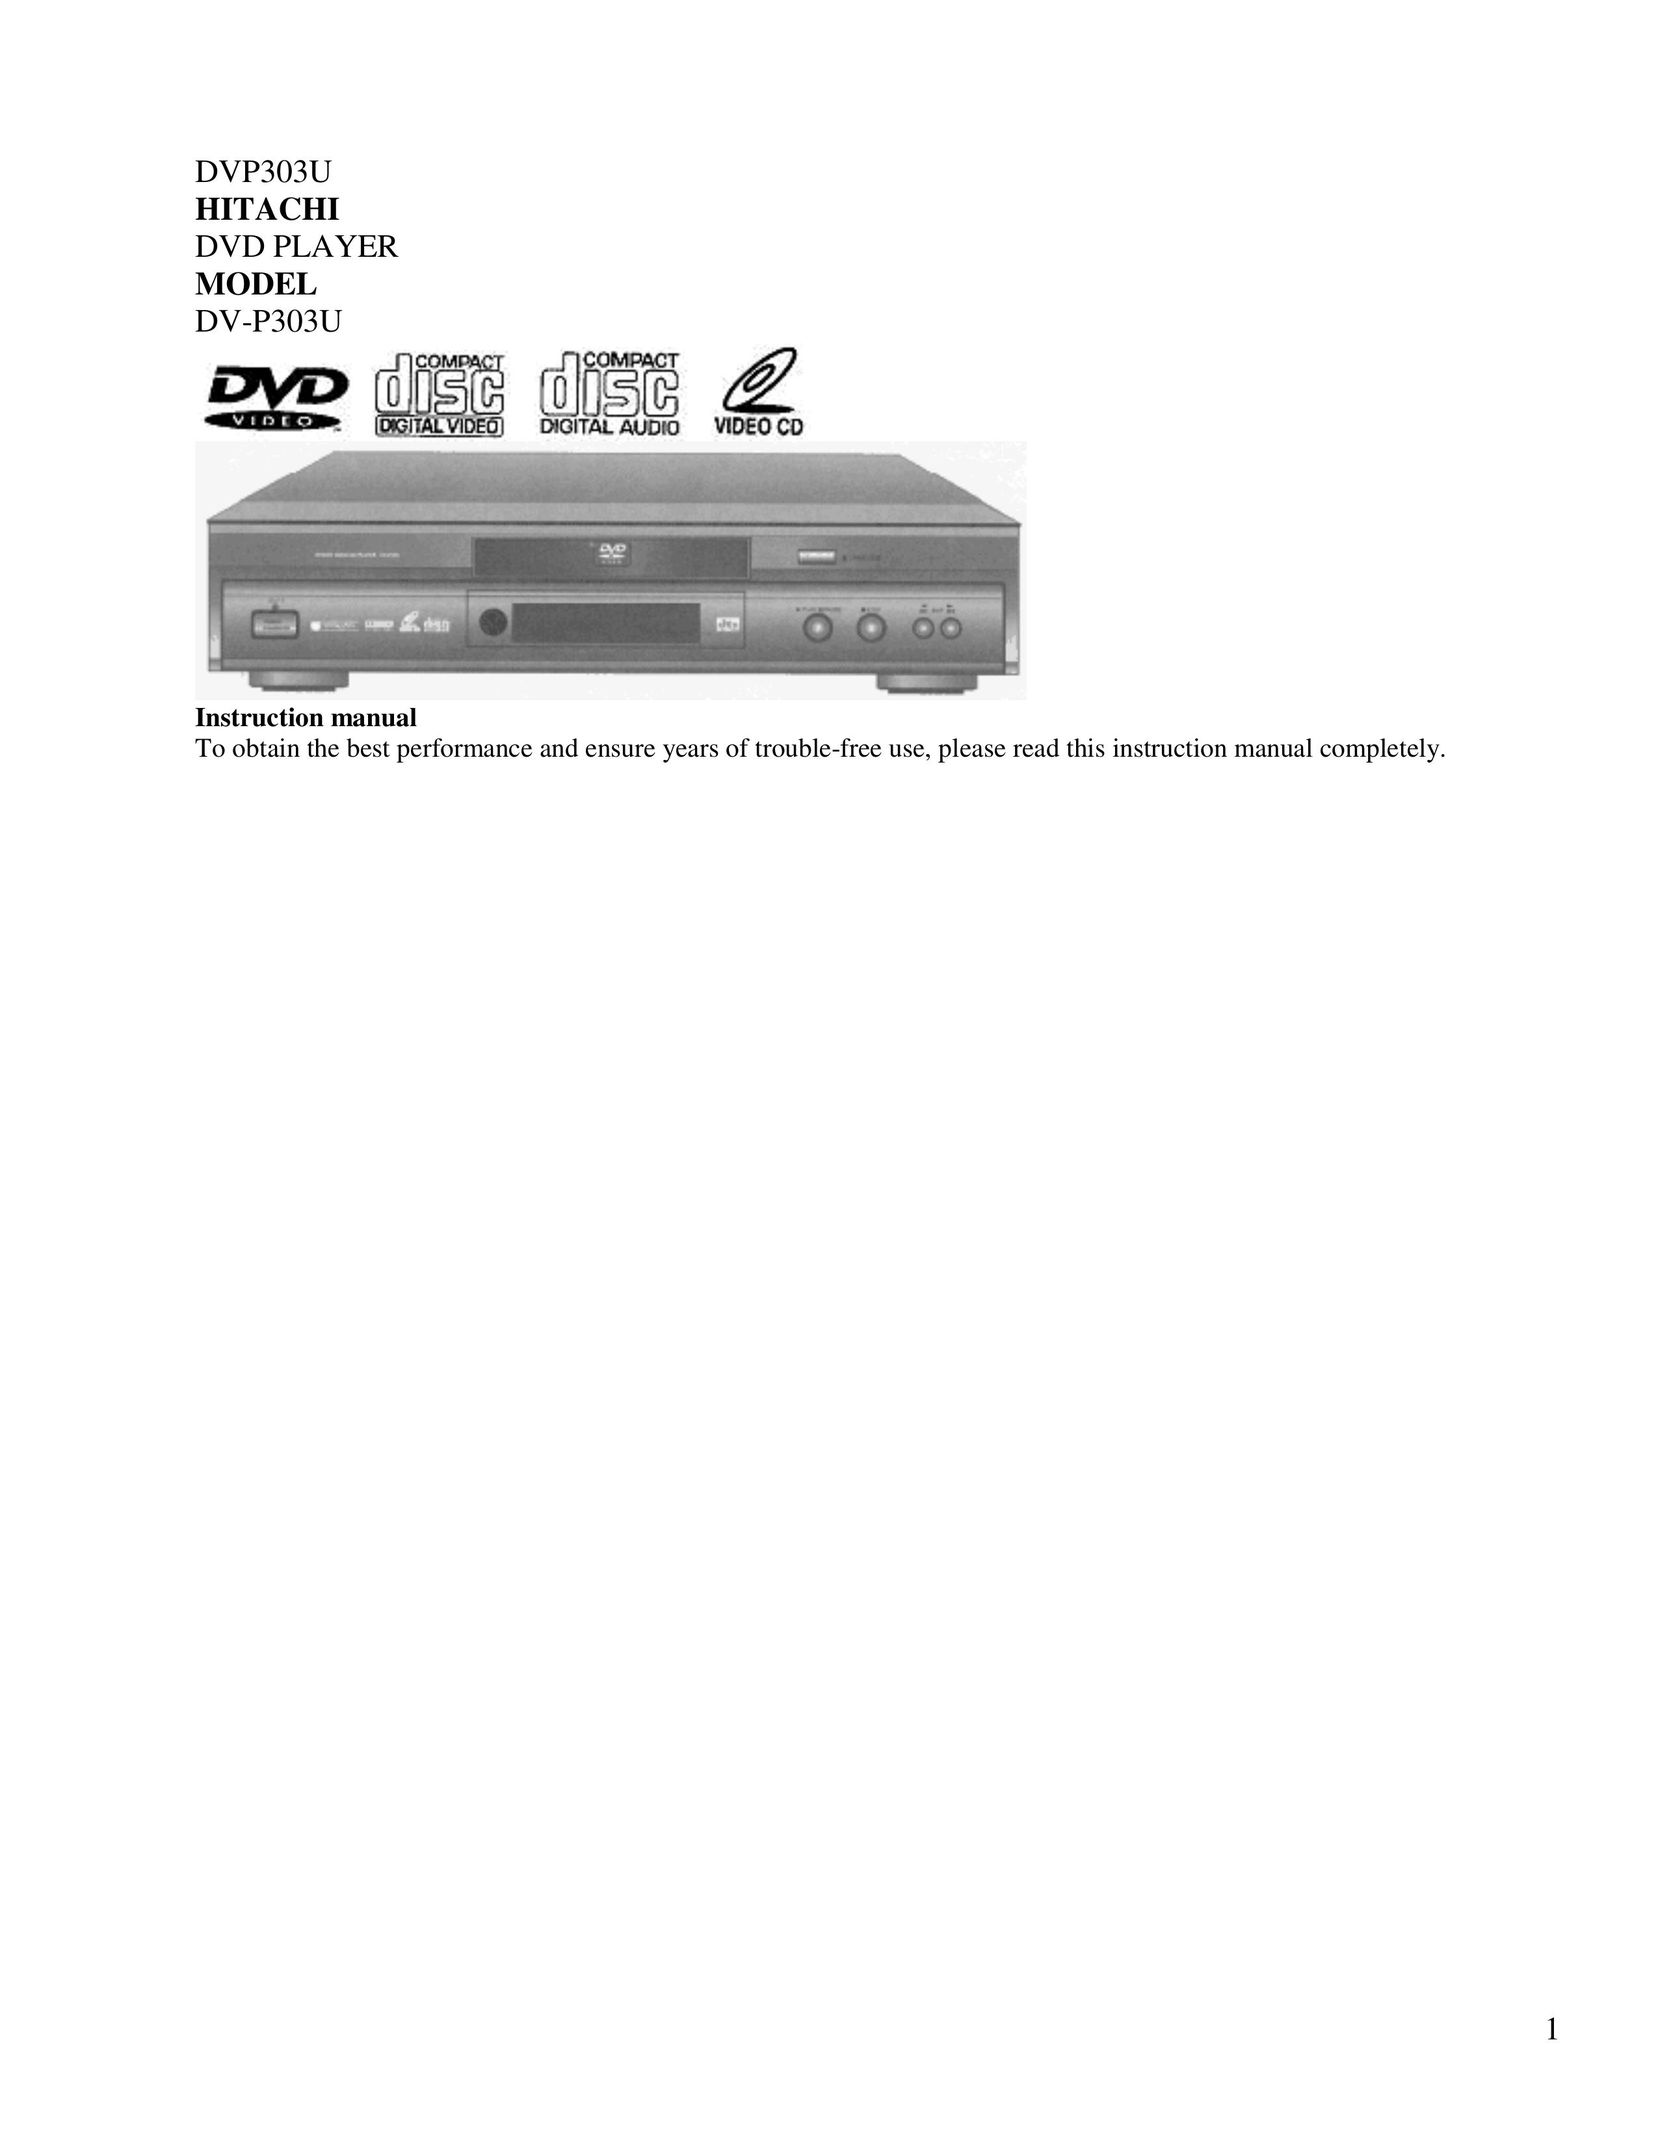 Hitachi DV-P303U DVD Player User Manual